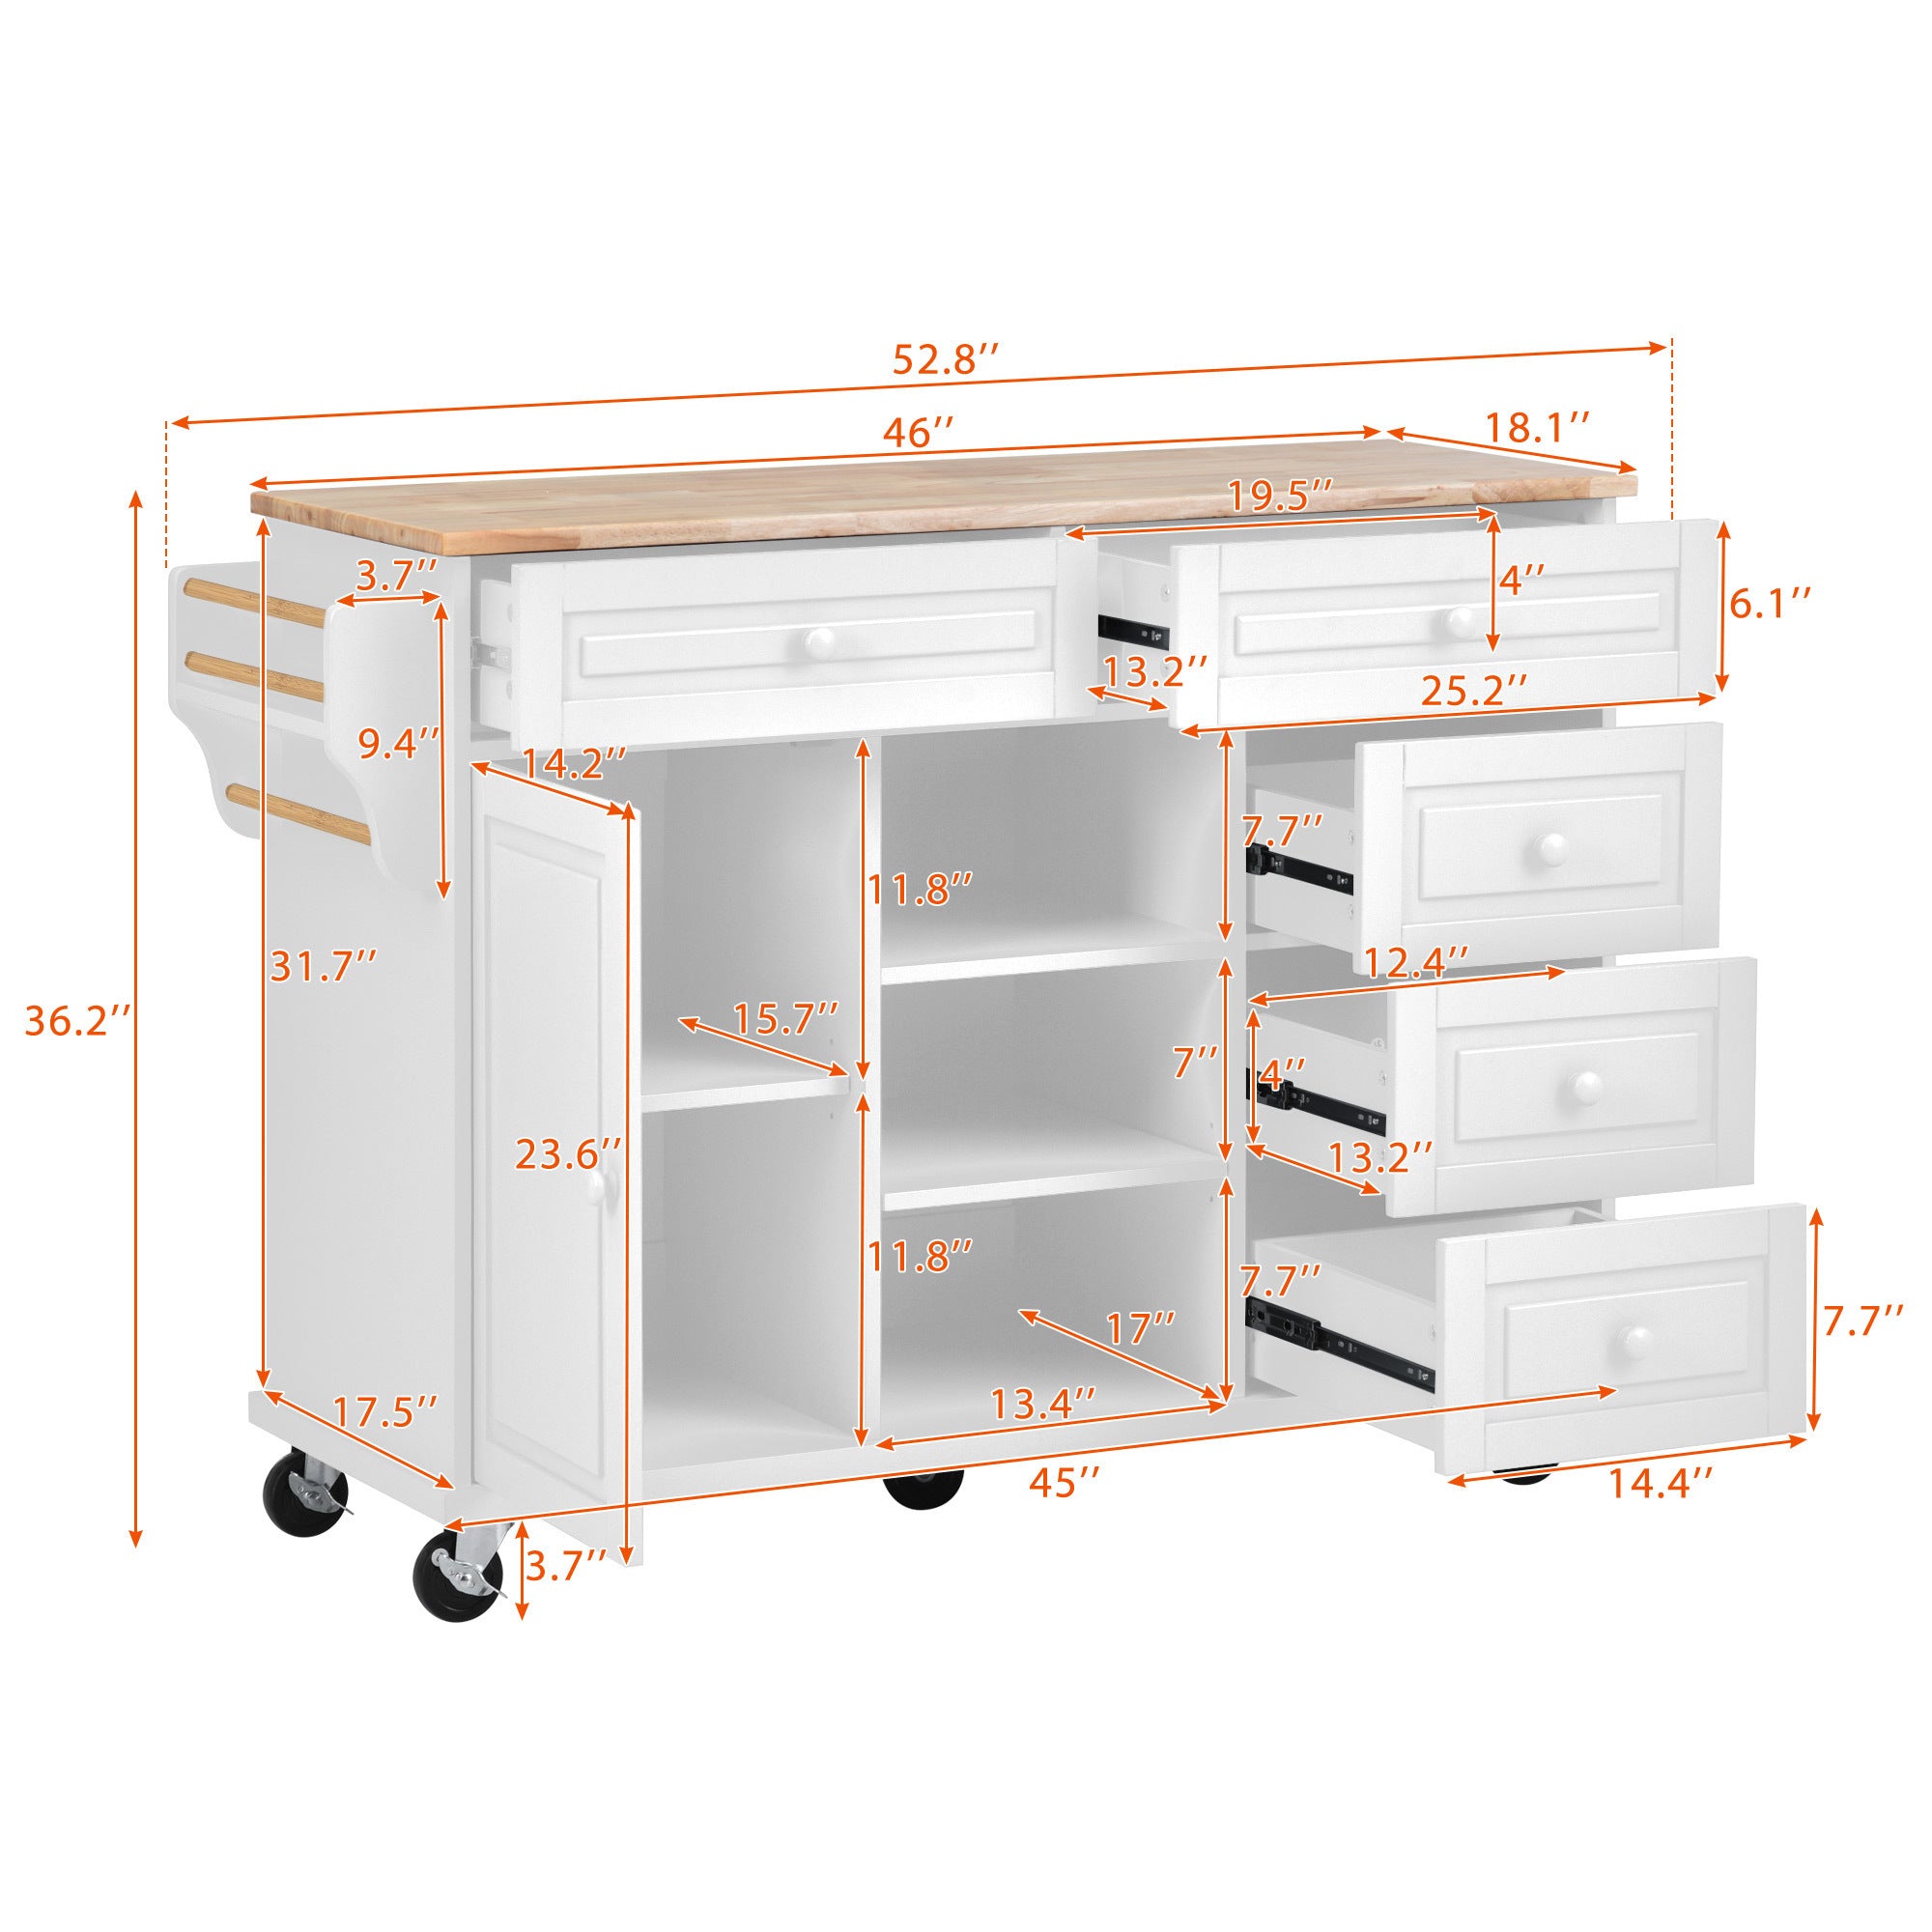 53" Kitchen Island Cart with Rubber Wood Desktop, 5 Storage Draws, Spice Rack & Wheels, White